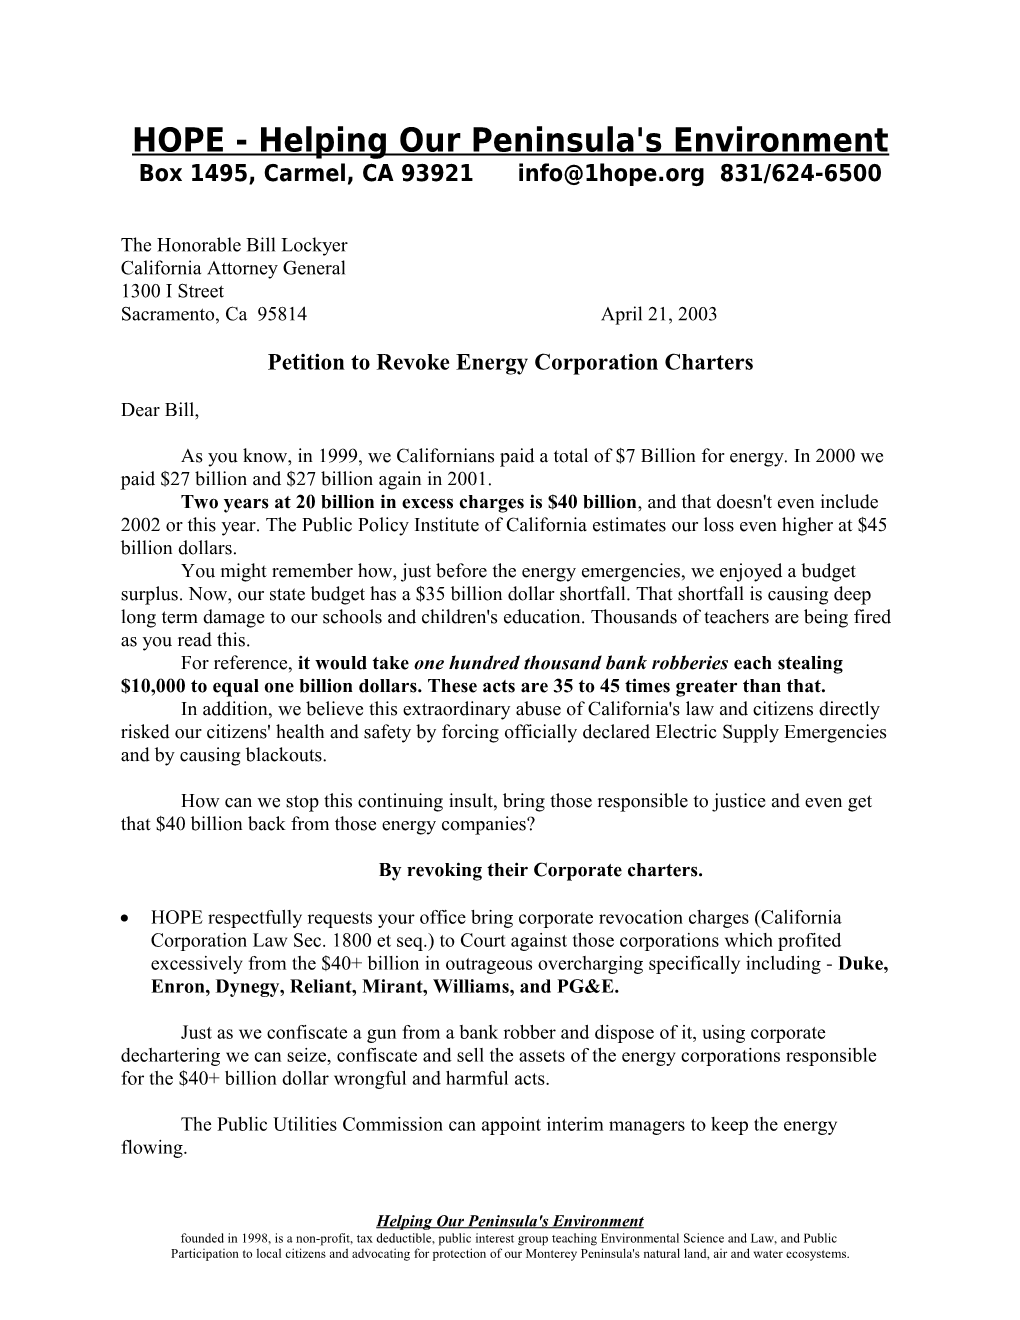 HOPE - Petition to Revoke Energy Corporation Charters